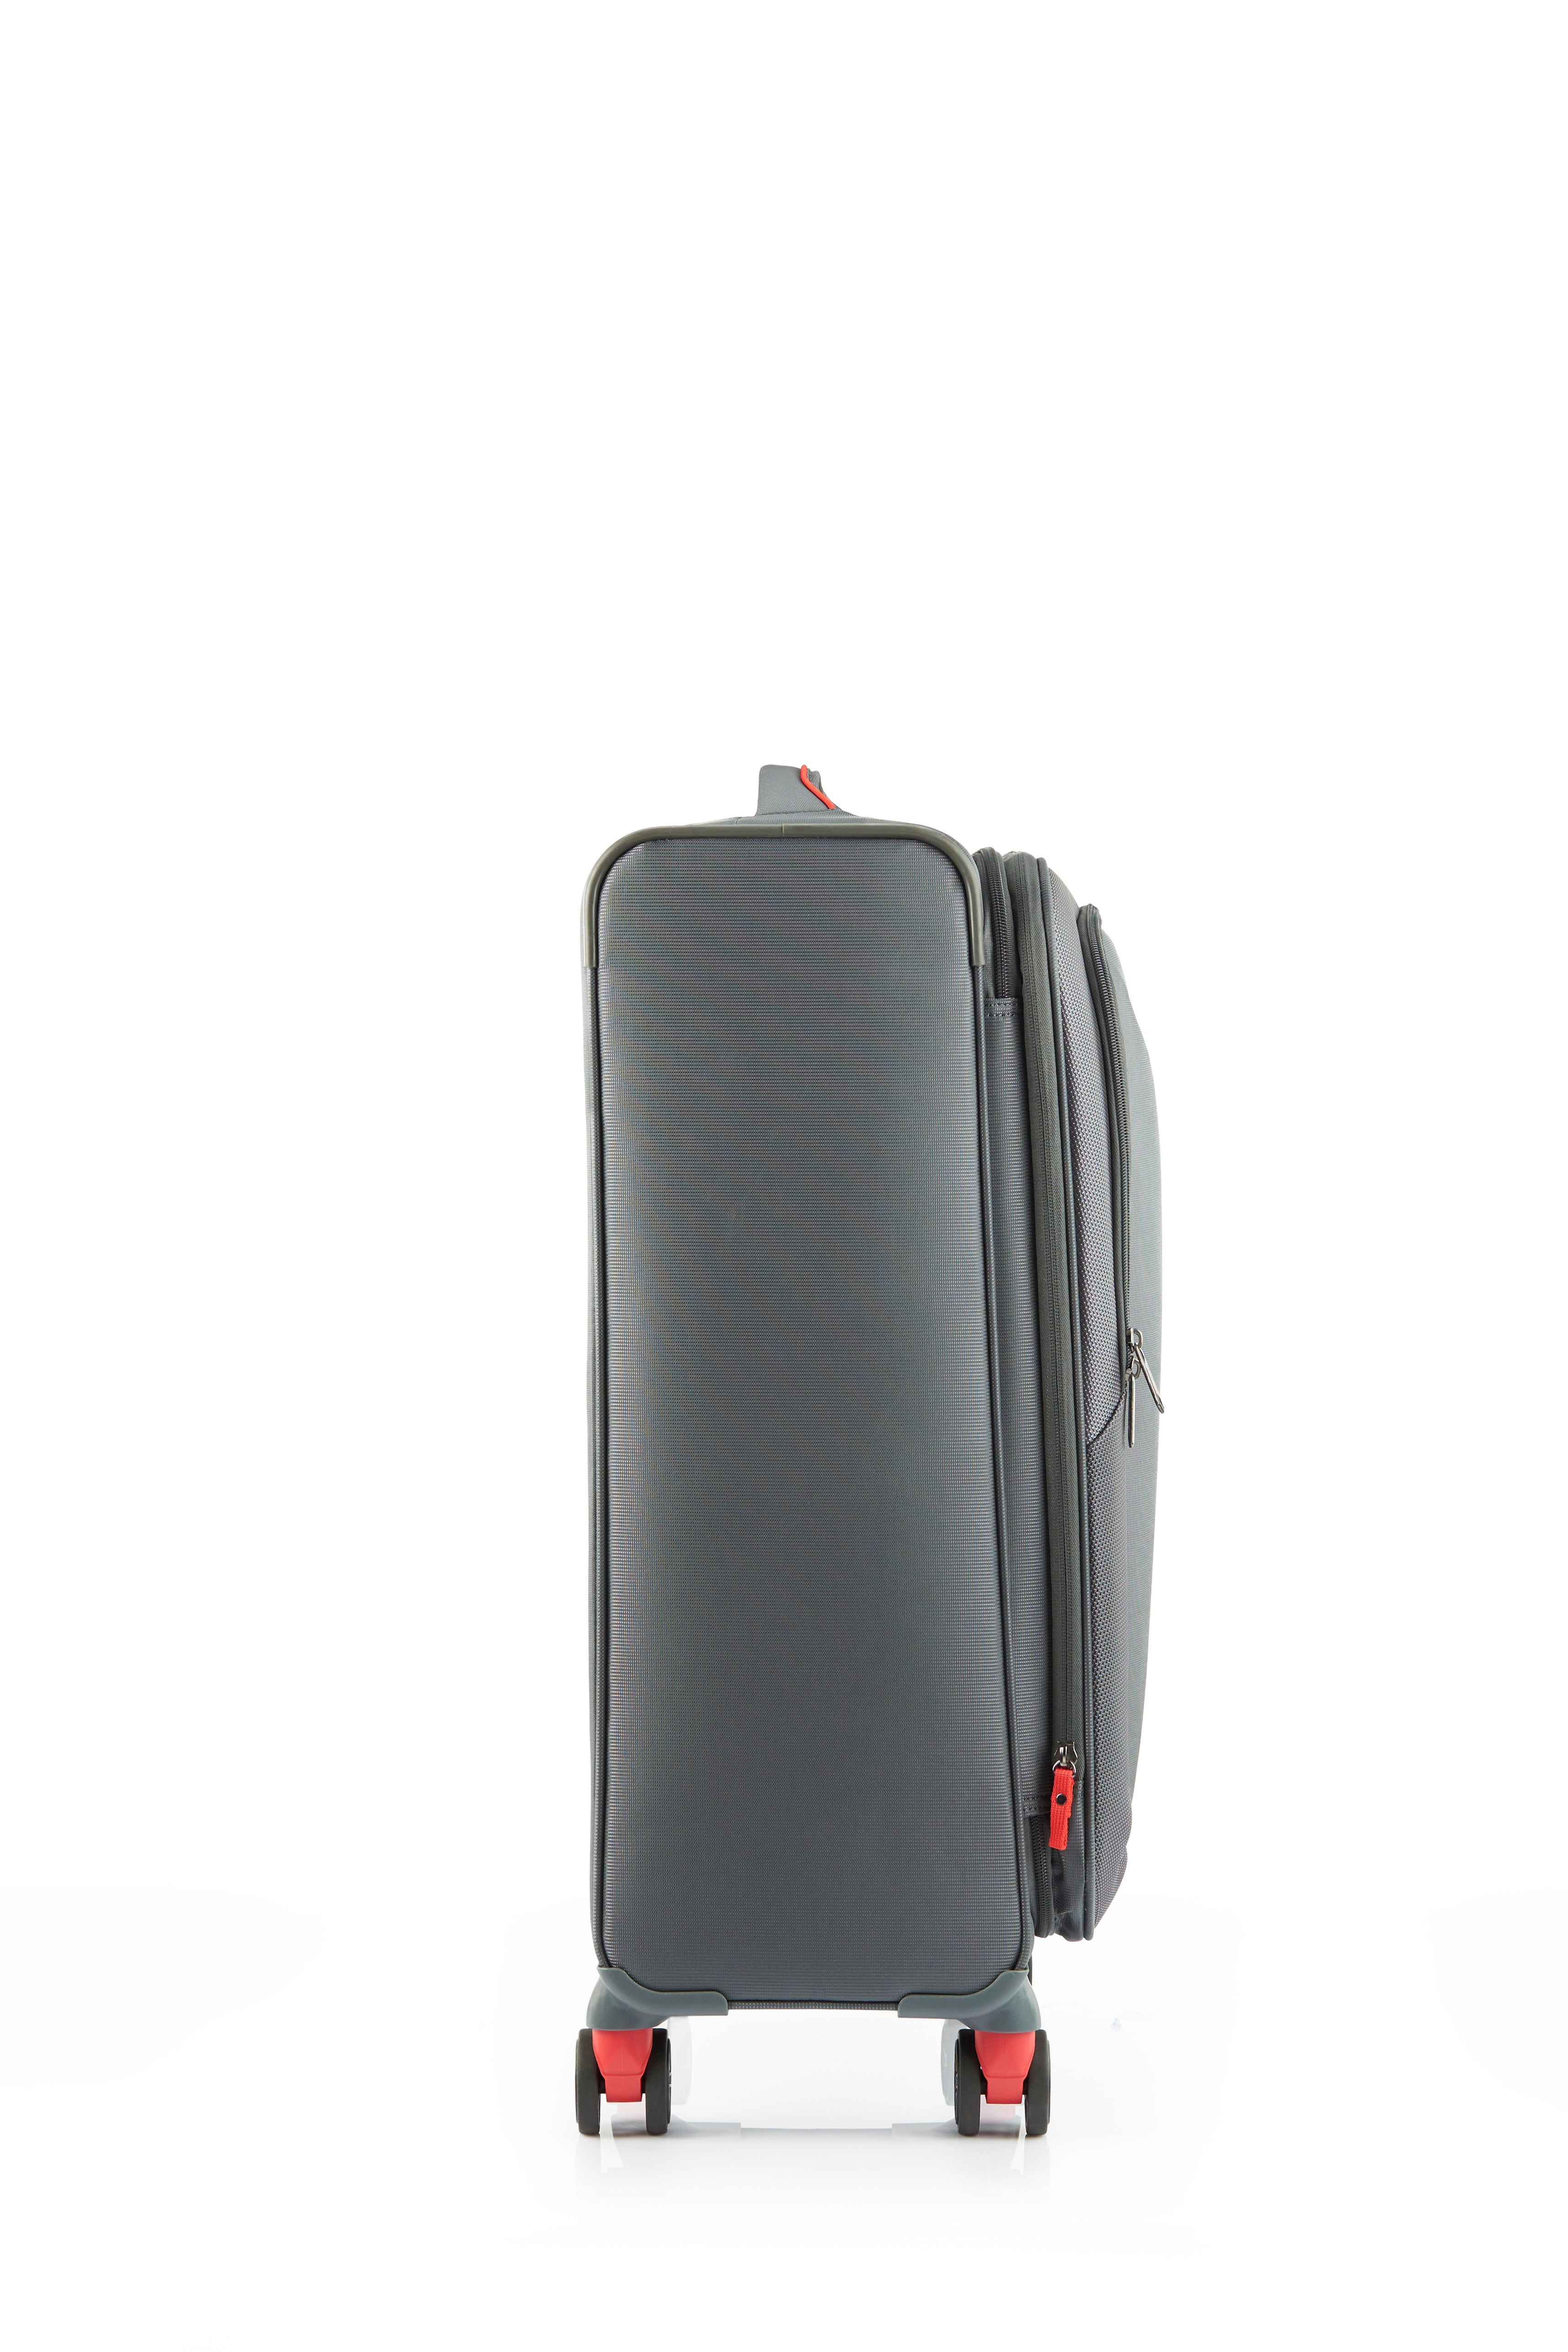 American Tourister - Applite ECO 71cm Medium Suitcase - Grey/Red-3